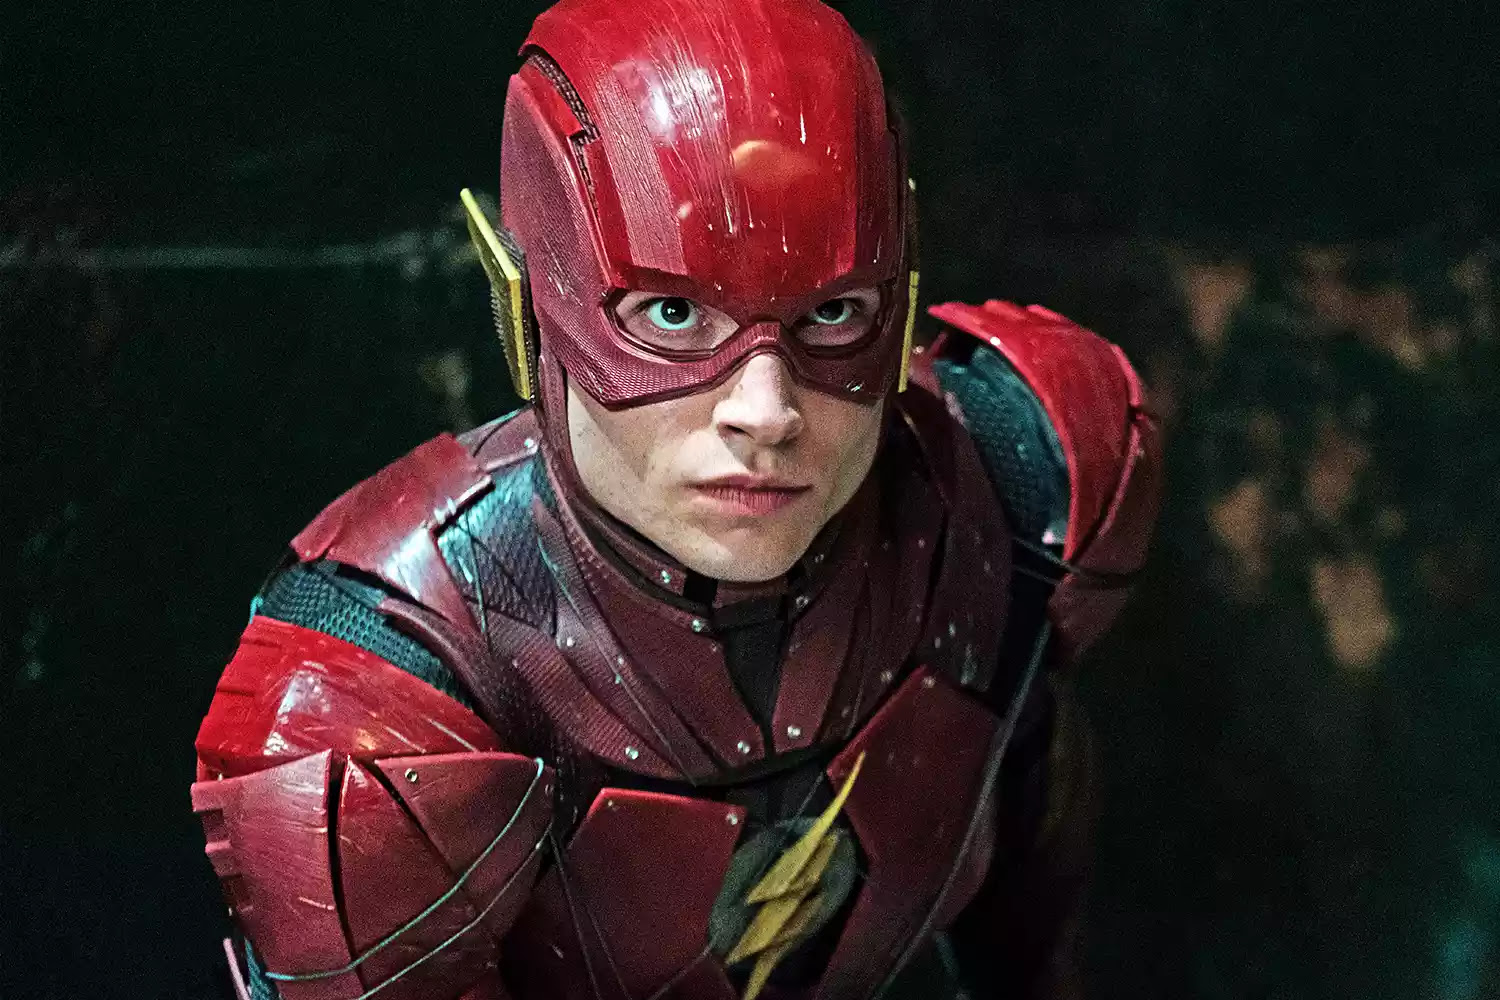 JUSTICE LEAGUE EZRA MILLER as The Flash